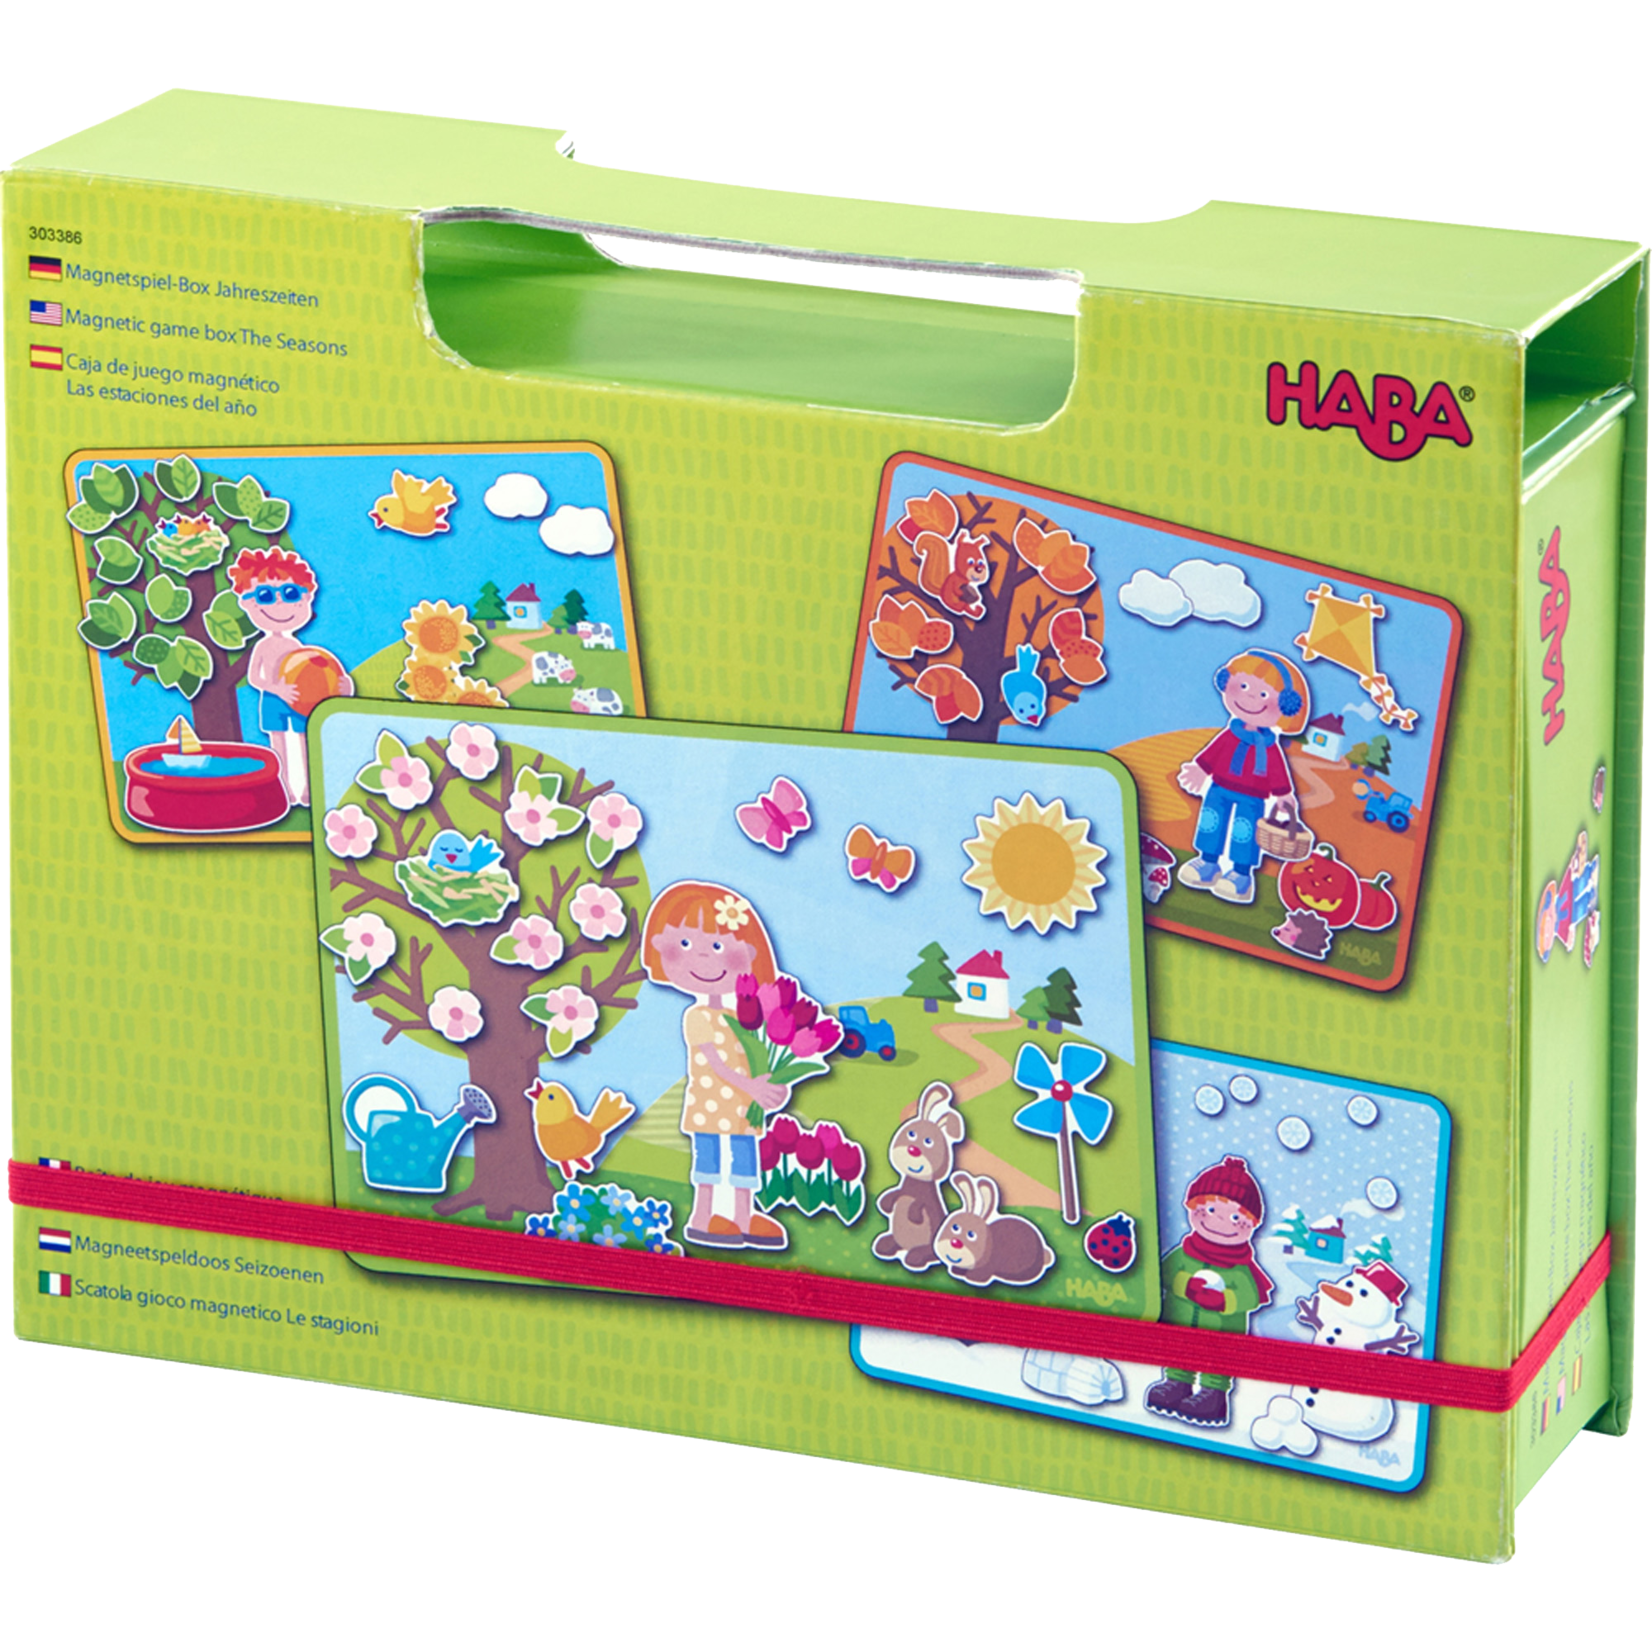 Haba The Seasons: Magnetic Box